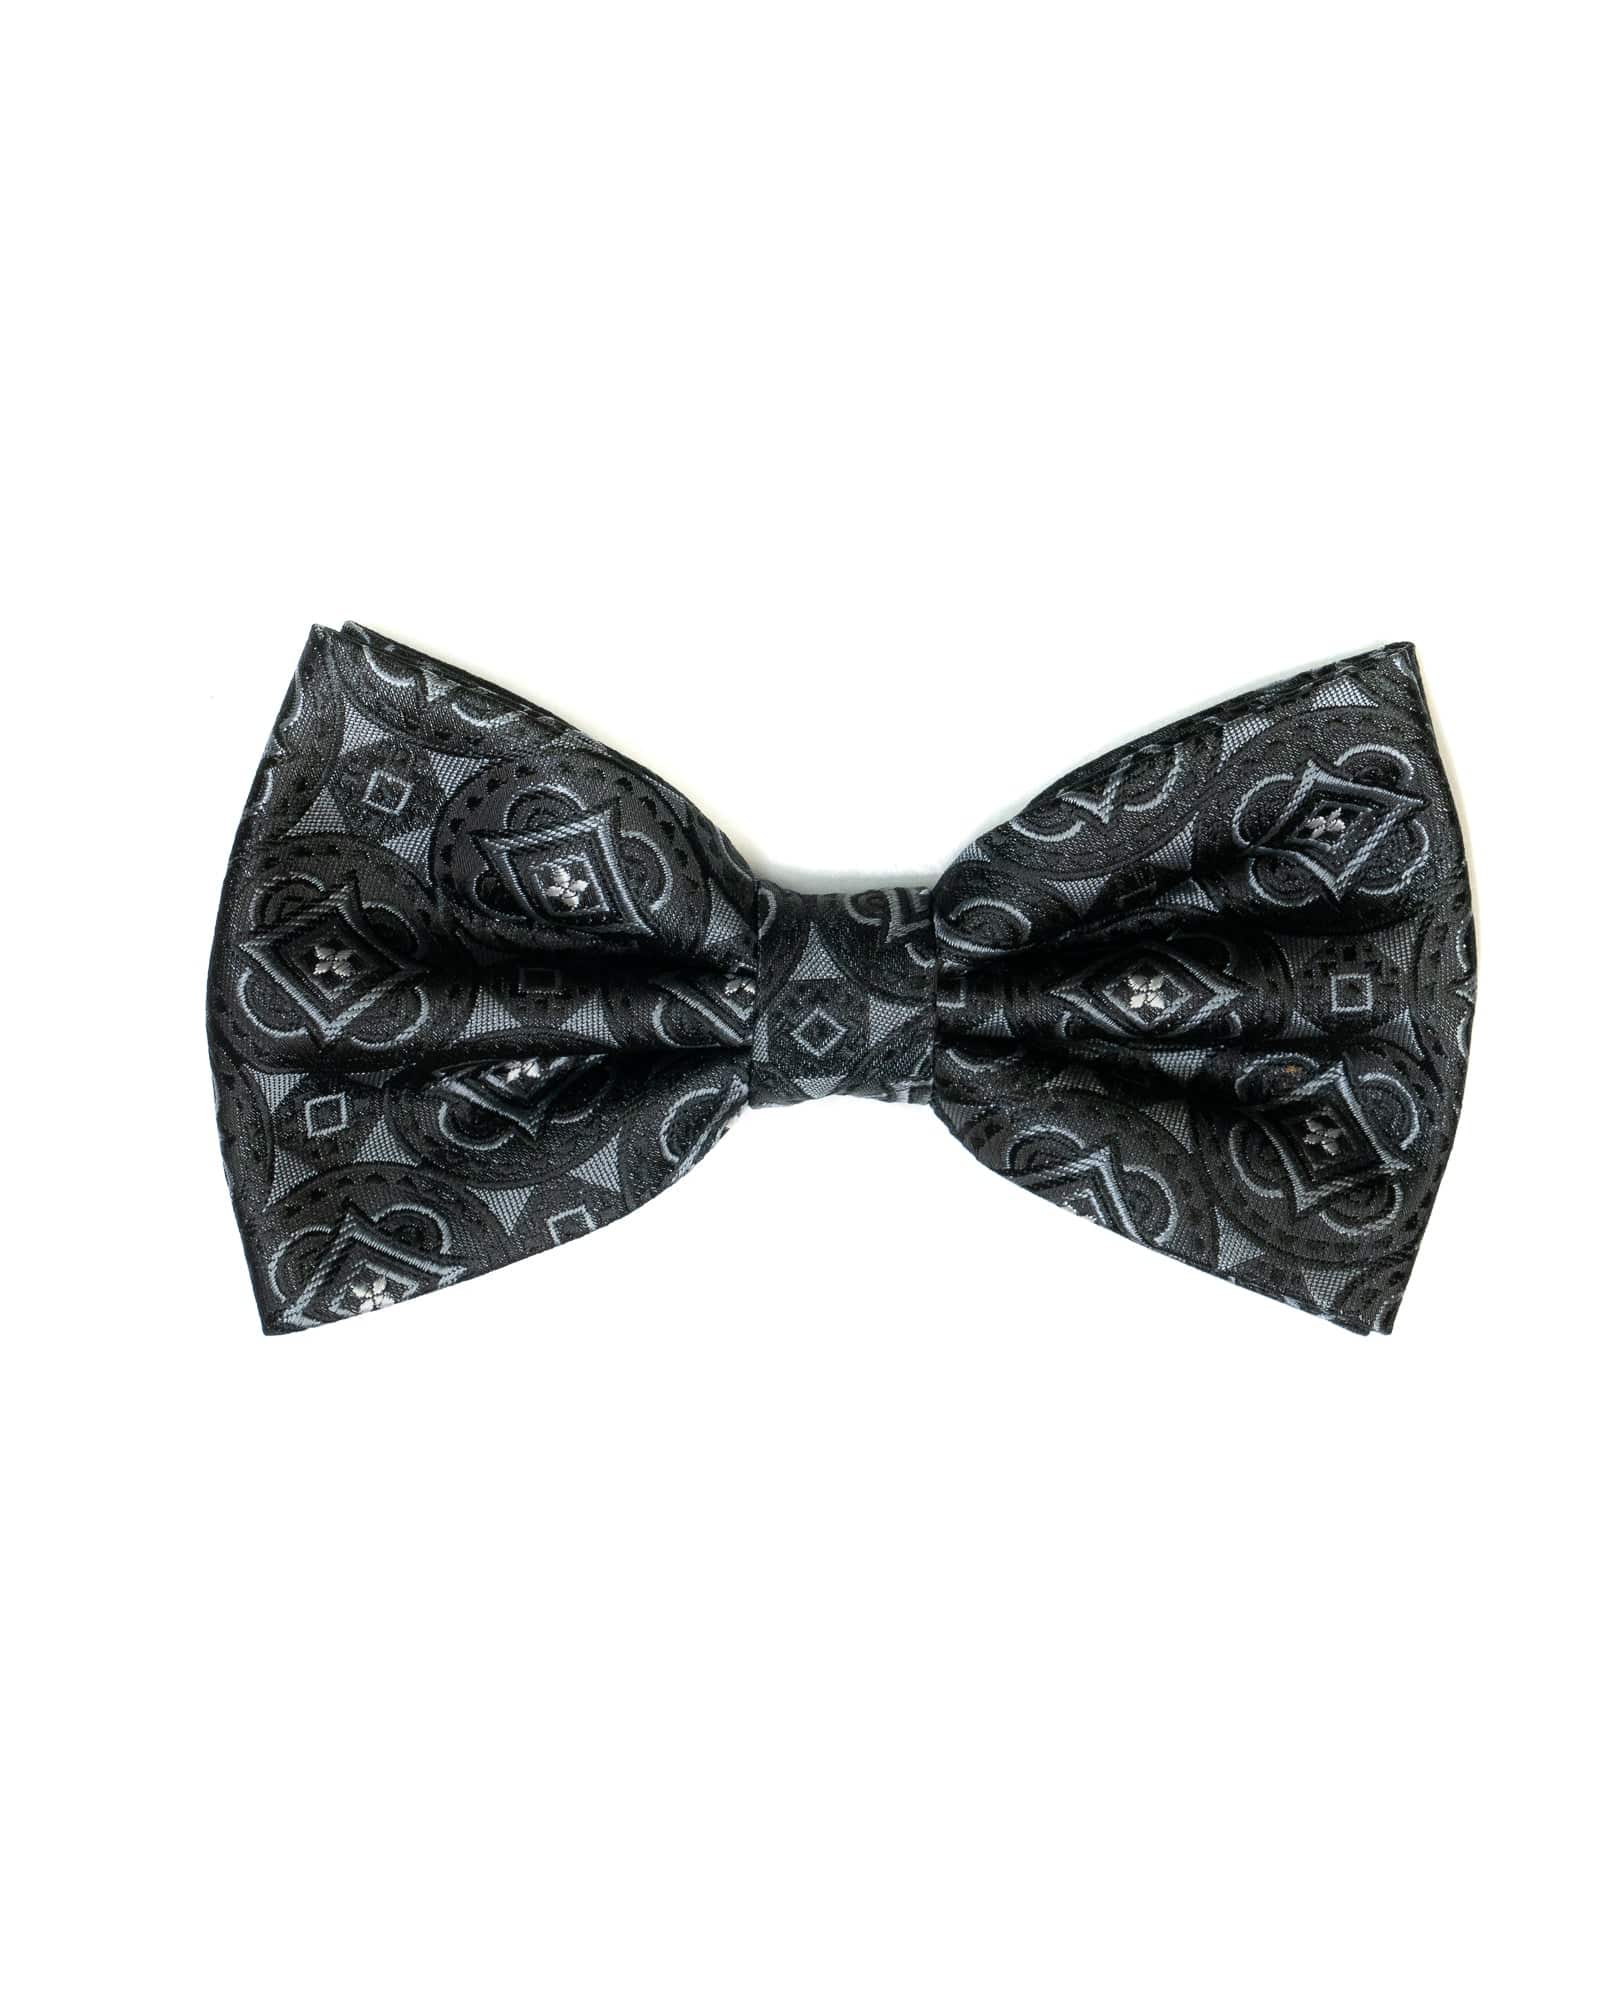 Bow Tie In Foulard Pattern Black & Grey - Rainwater's Men's Clothing and Tuxedo Rental